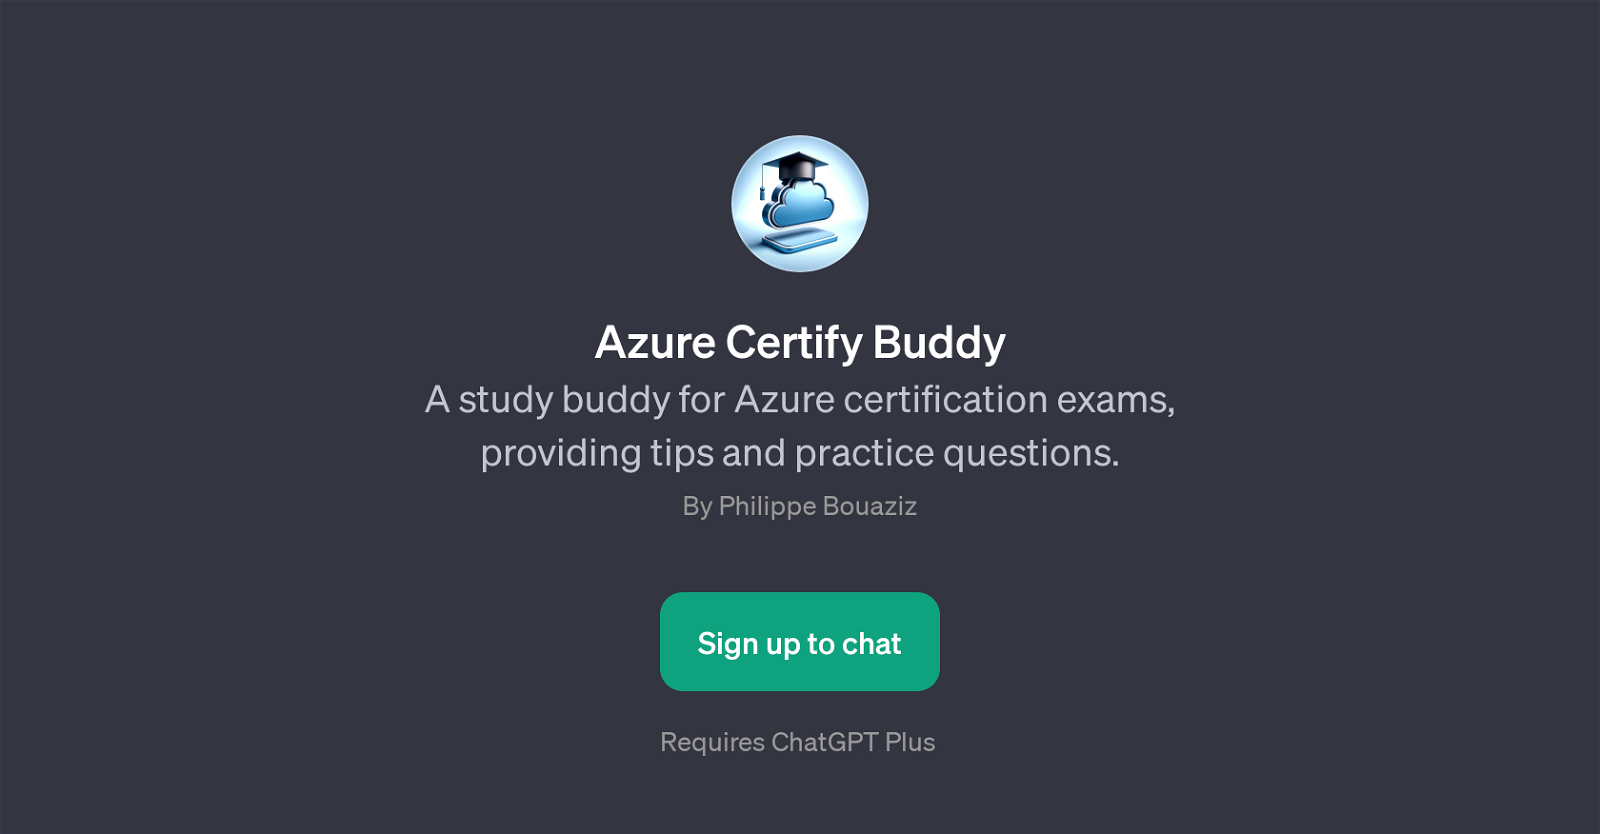 Azure Certify Buddy website